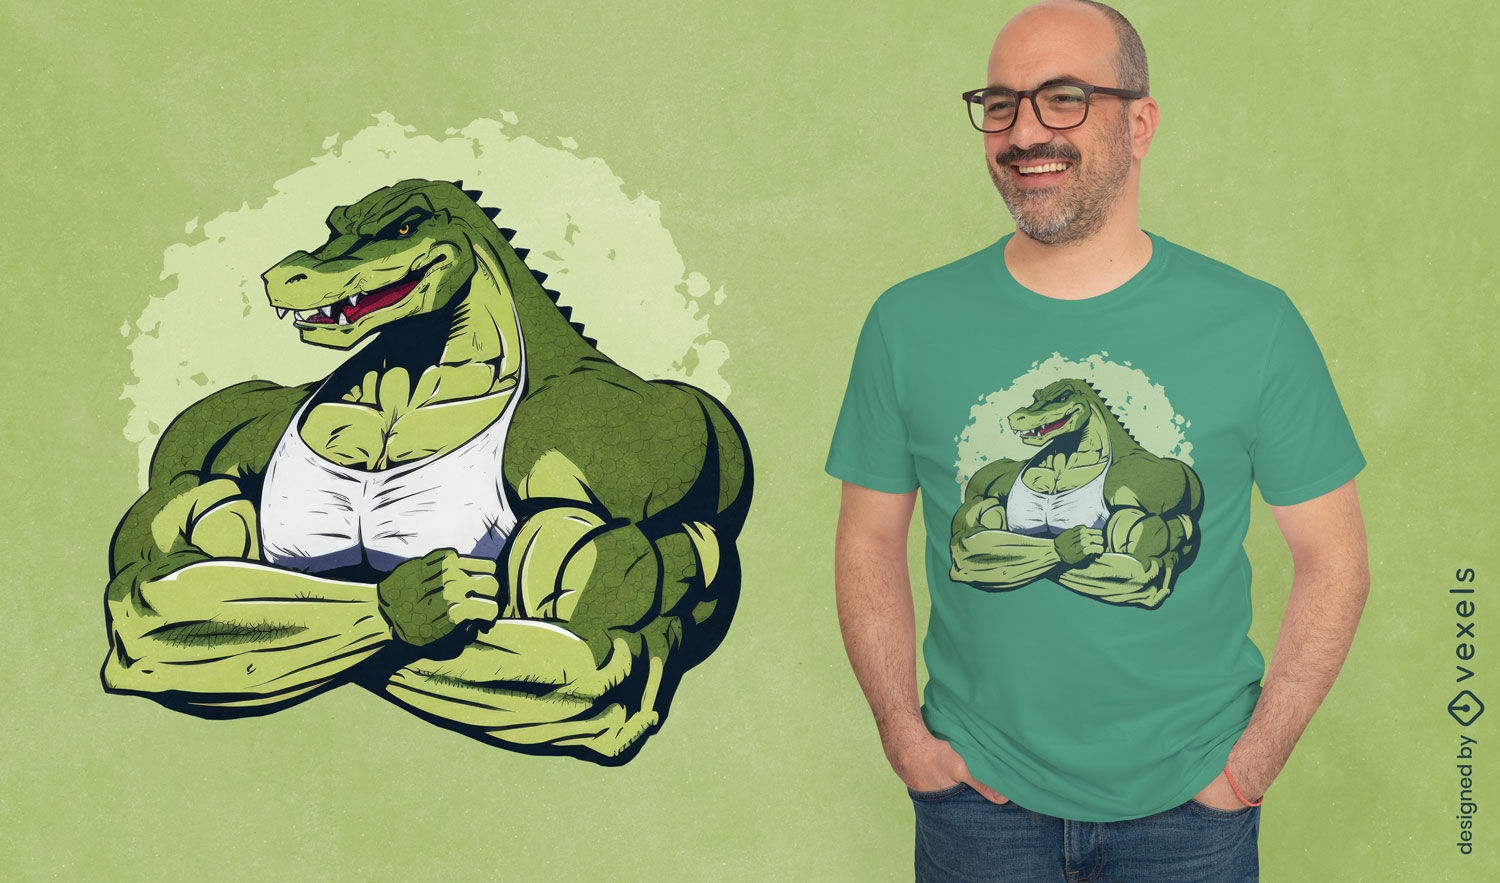 Strong alligator gym t-shirt design